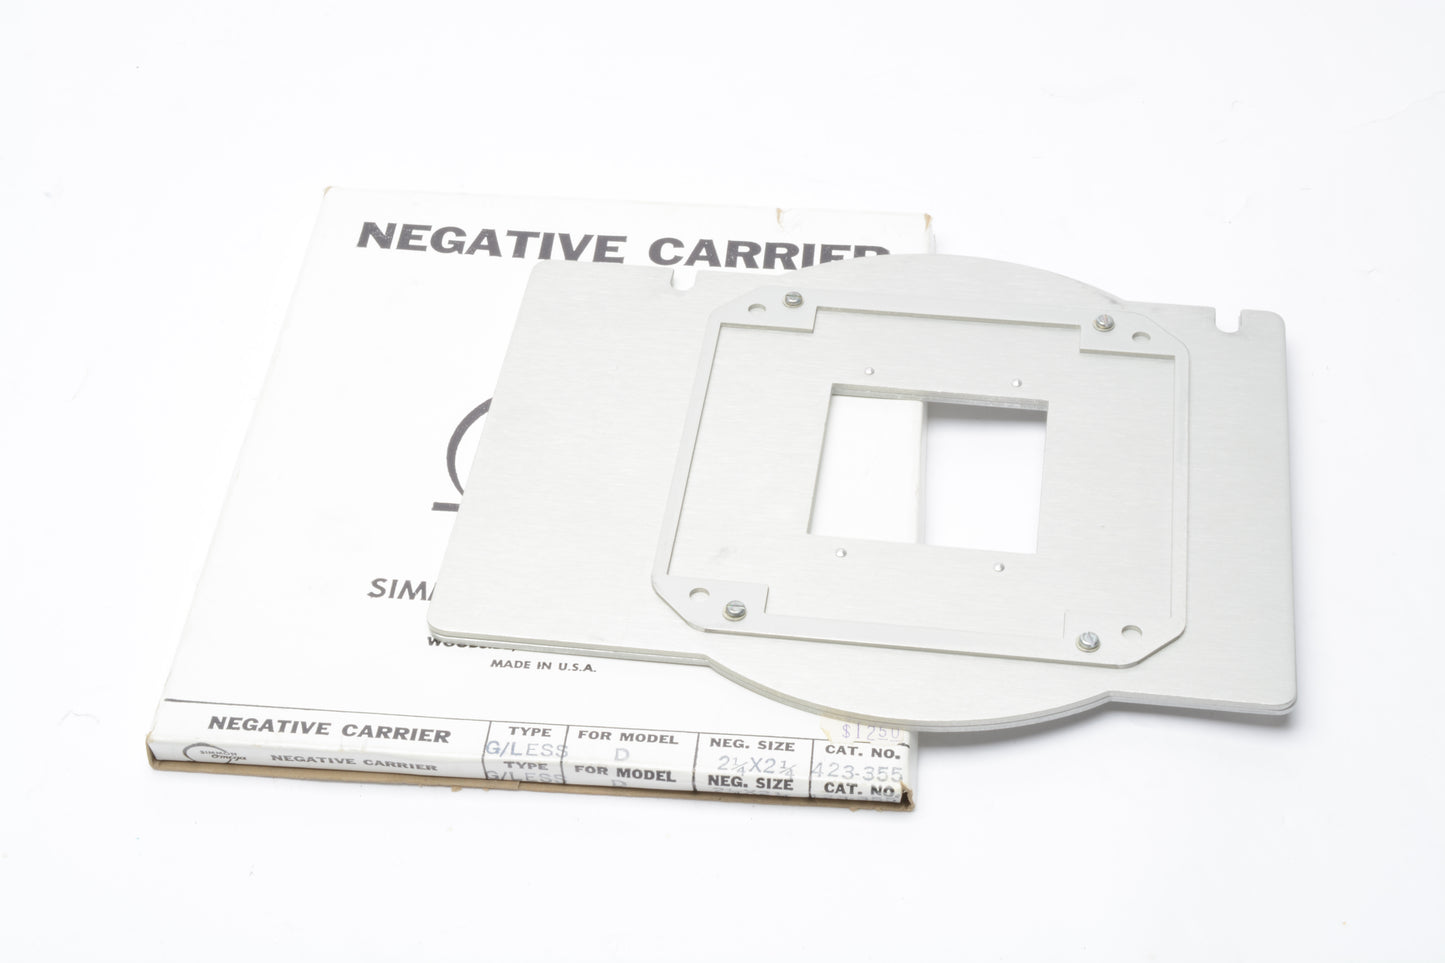 Omega Model D 2 1/4 x 2 1/4 glassless negative carrier #423-355